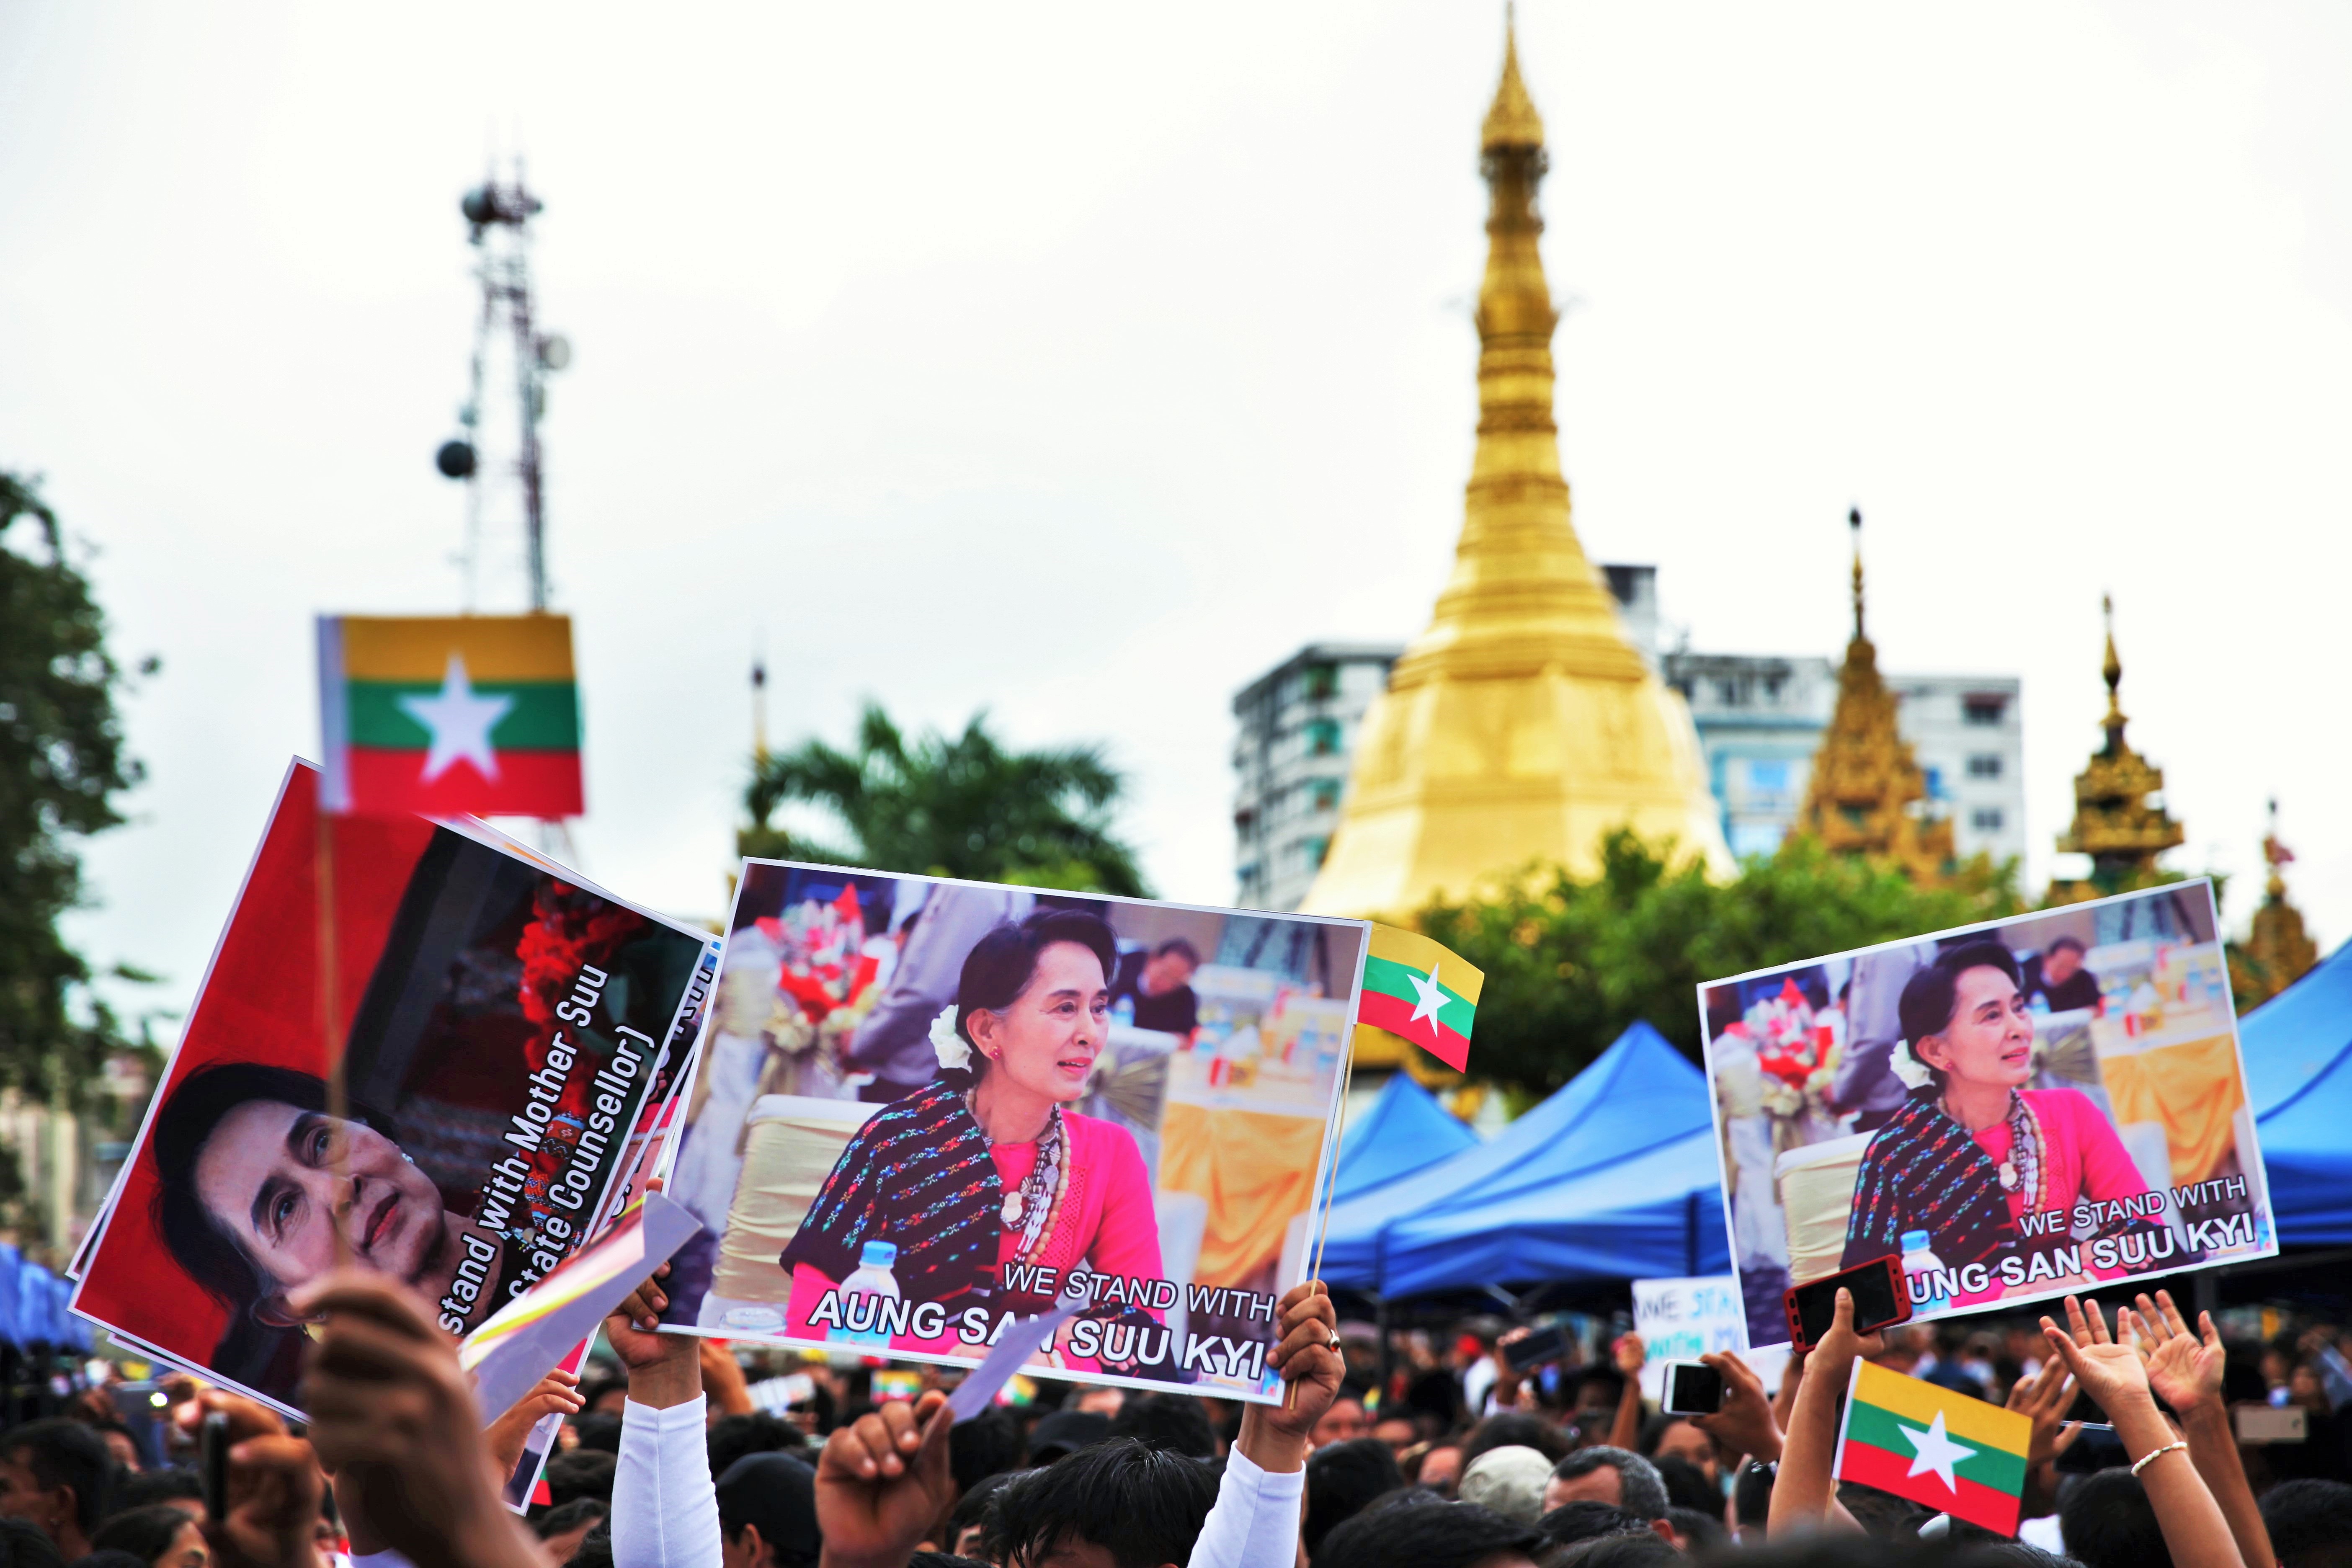 Both plaudits and criticism for Suu Kyi’s speech on Arakan crisis